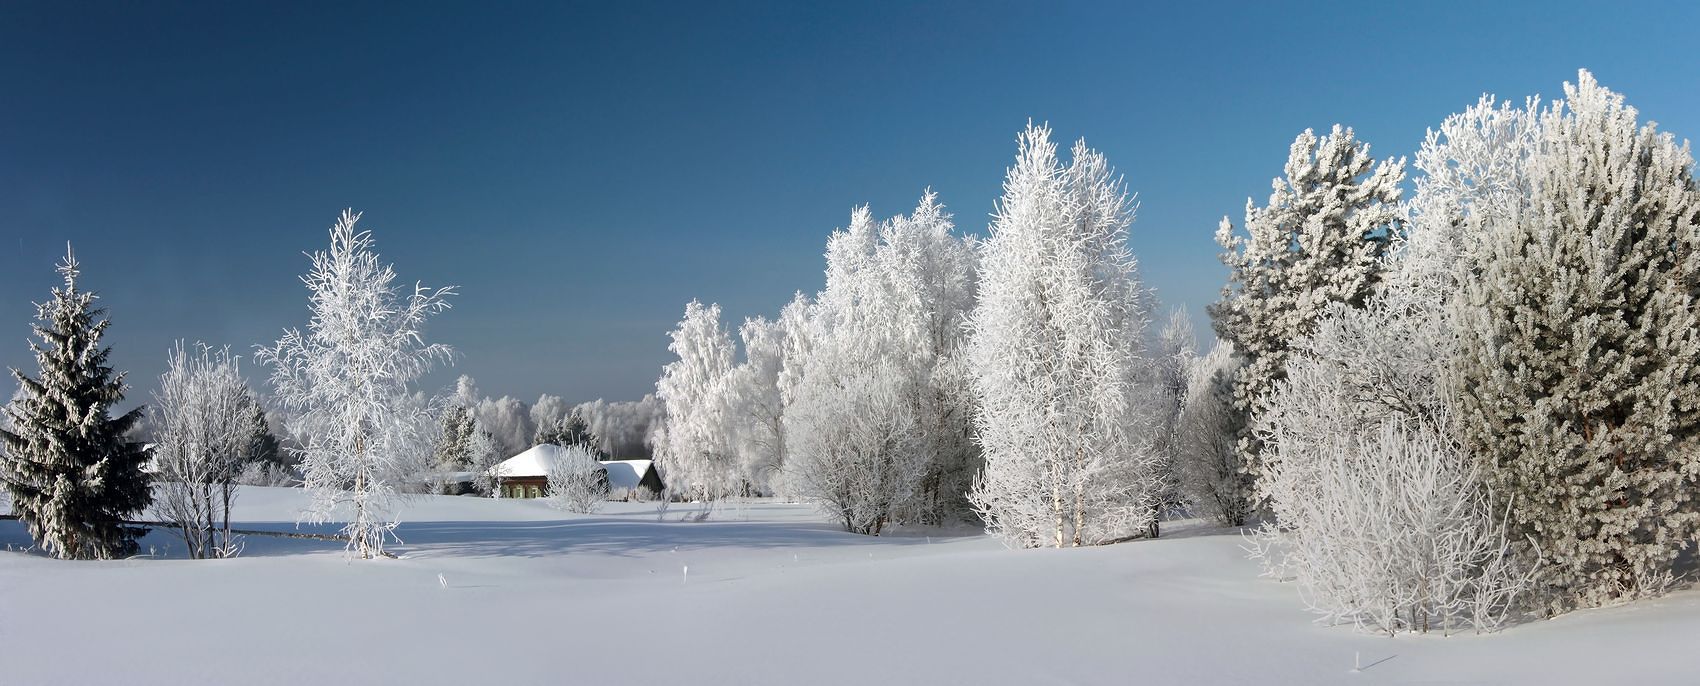 Панорама с зимними деревьями